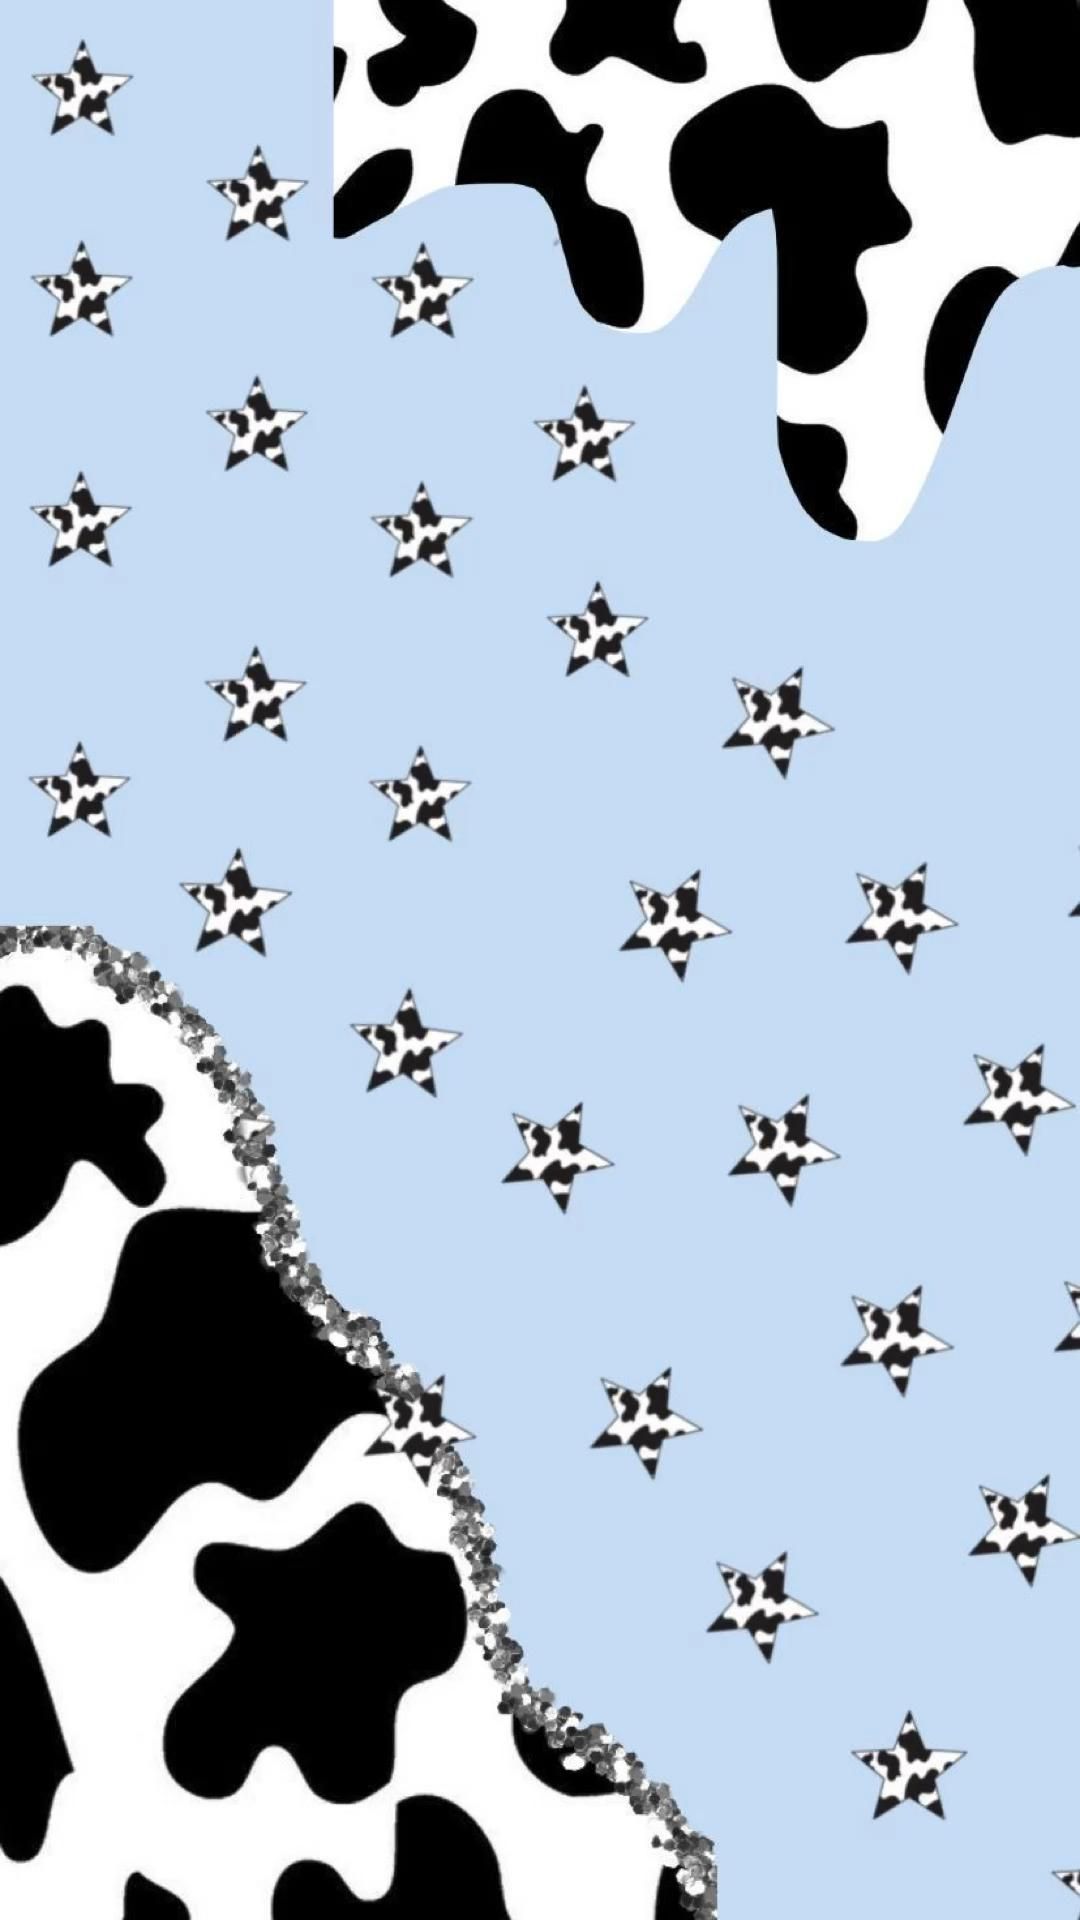 aesthetic cow print wallpaper iphone